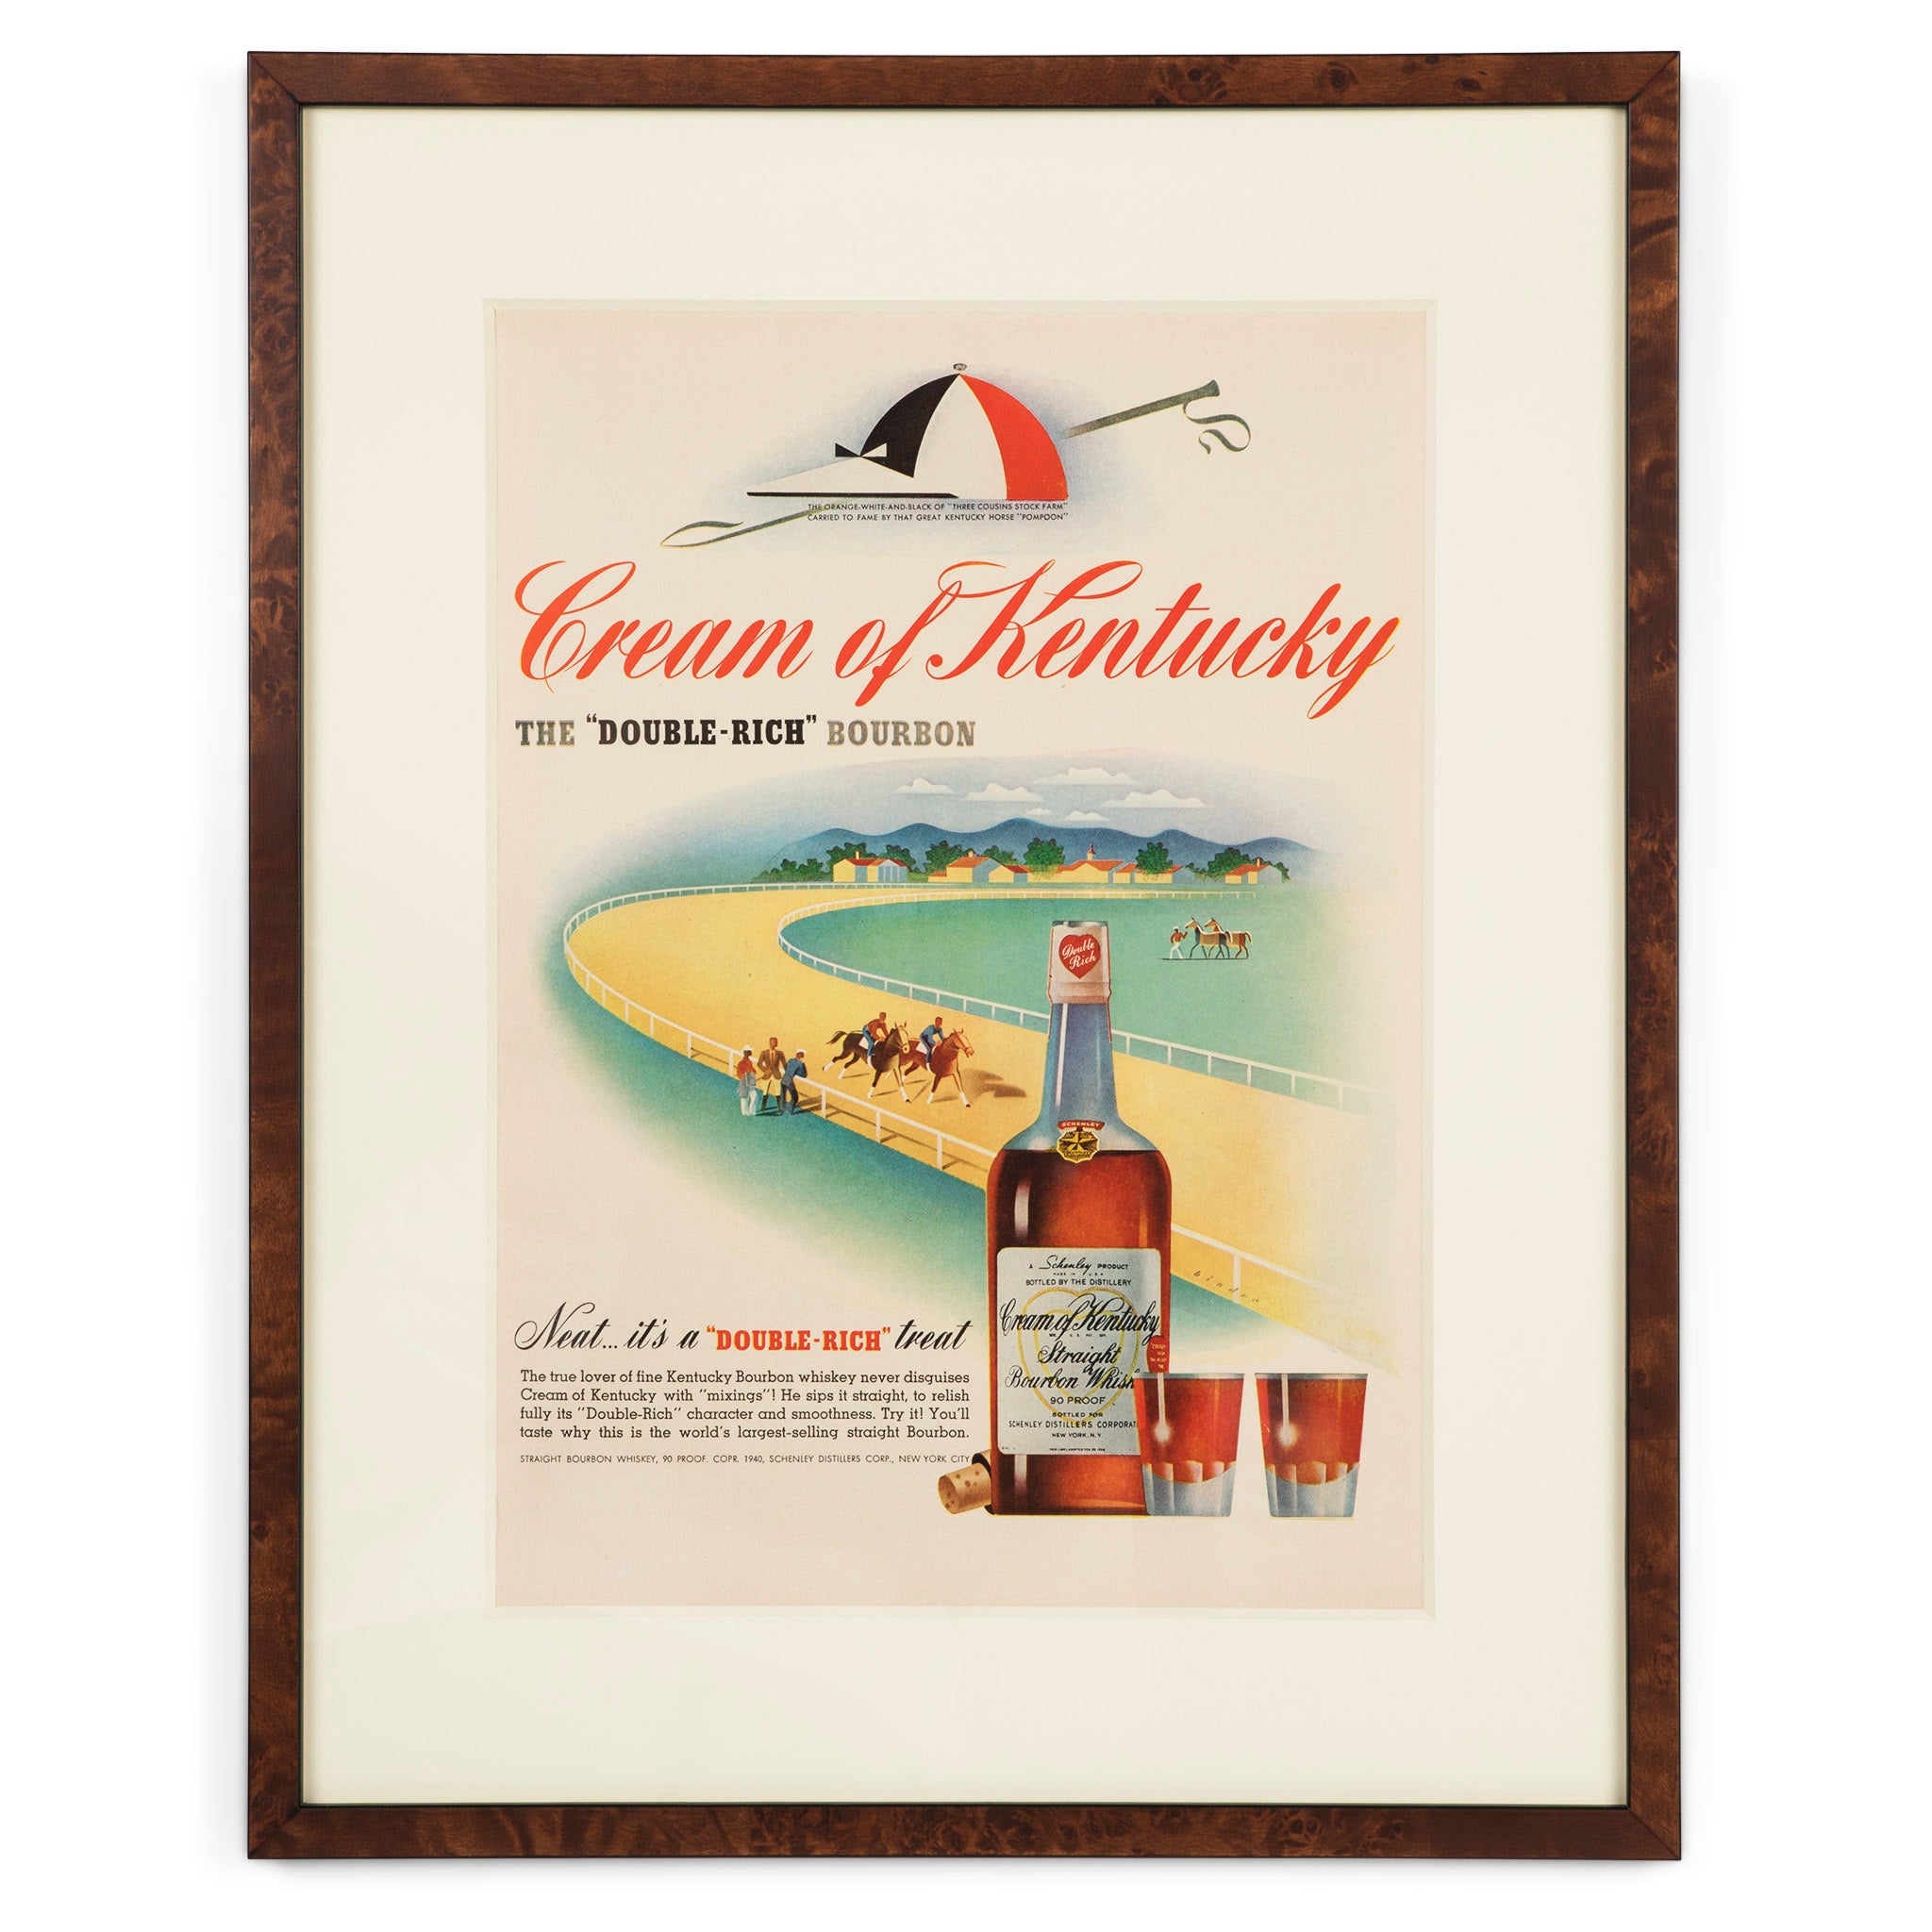 Cream of Kentucky Bourbon Whiskey Advertisement